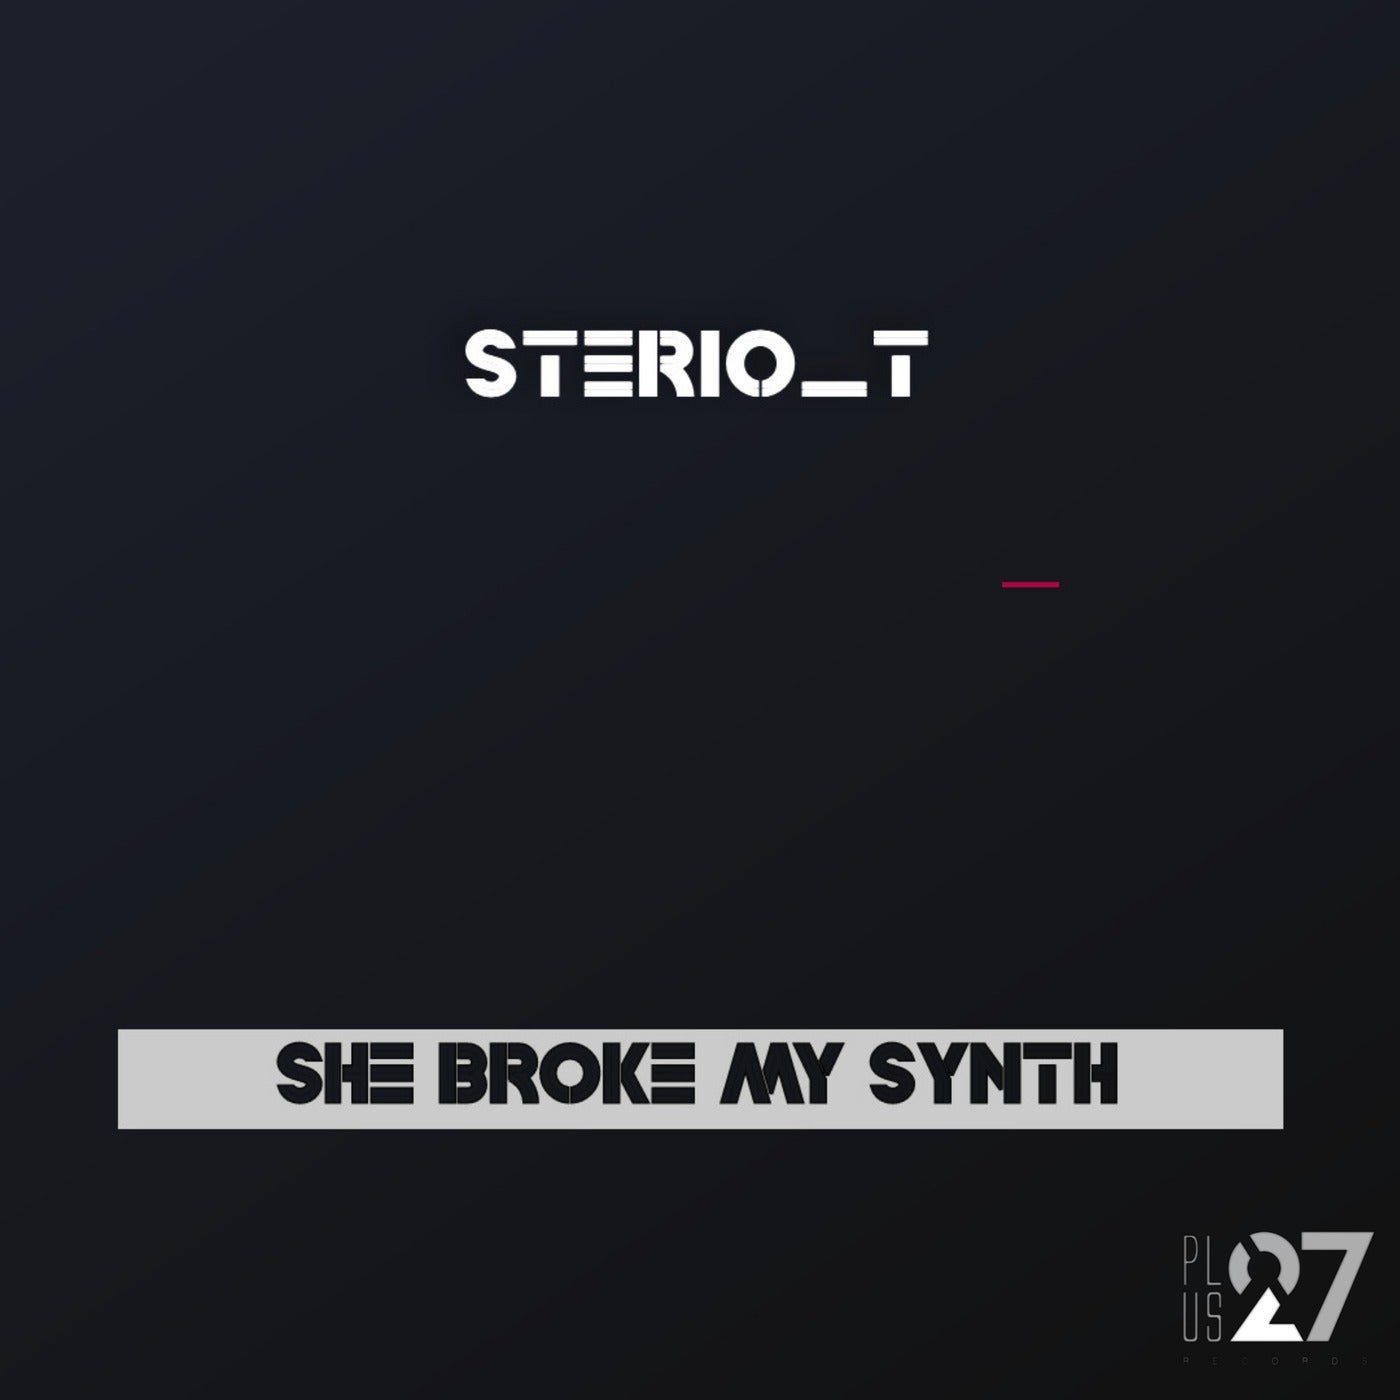 She broke my synth